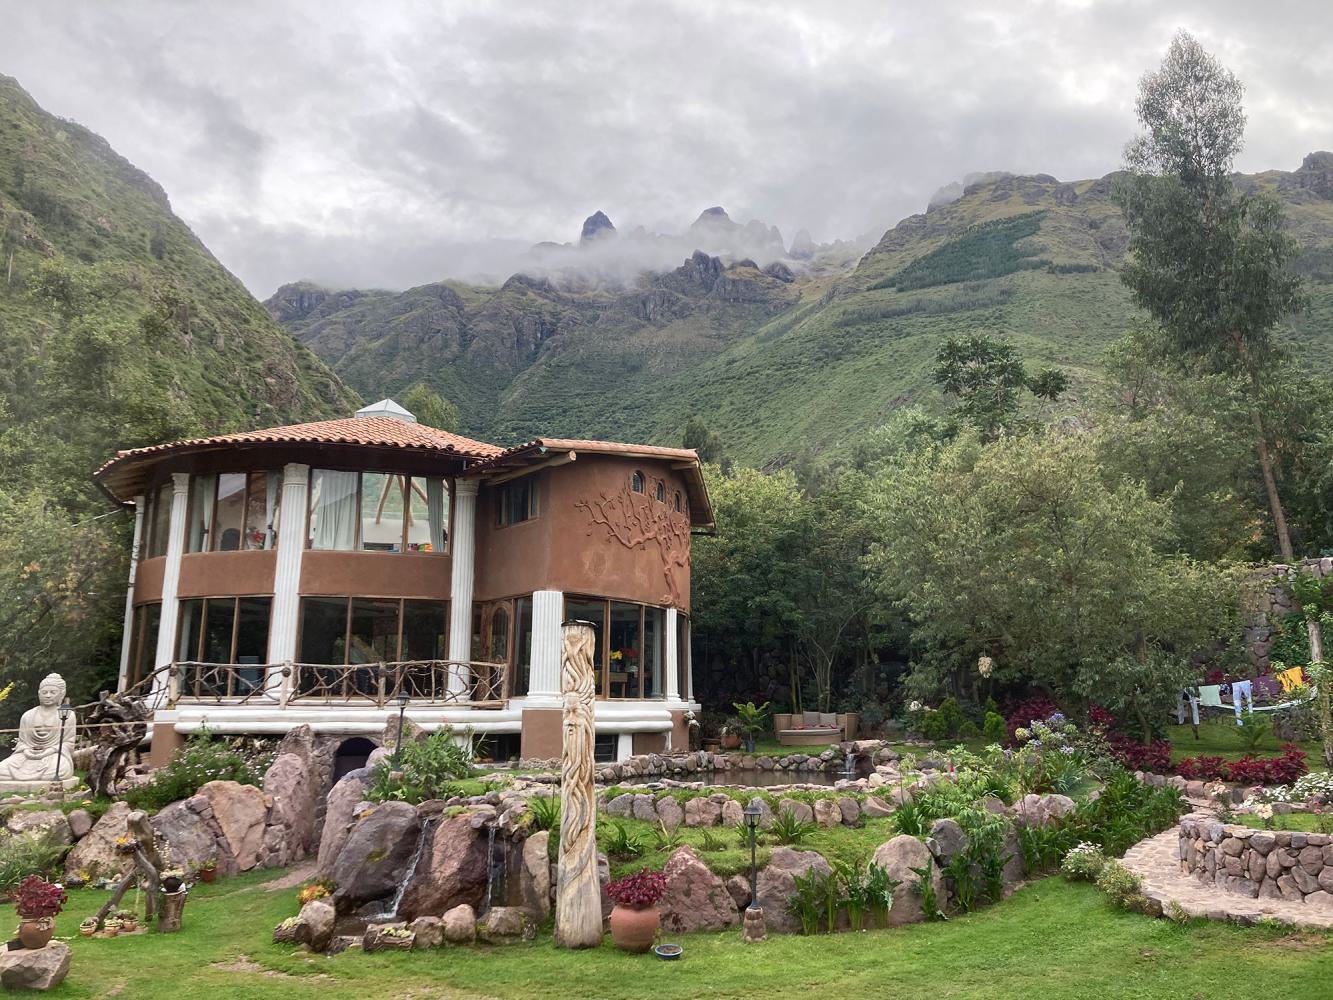 A circular retreat center nestled in a valley beneath a towering Peruvian mountain range.